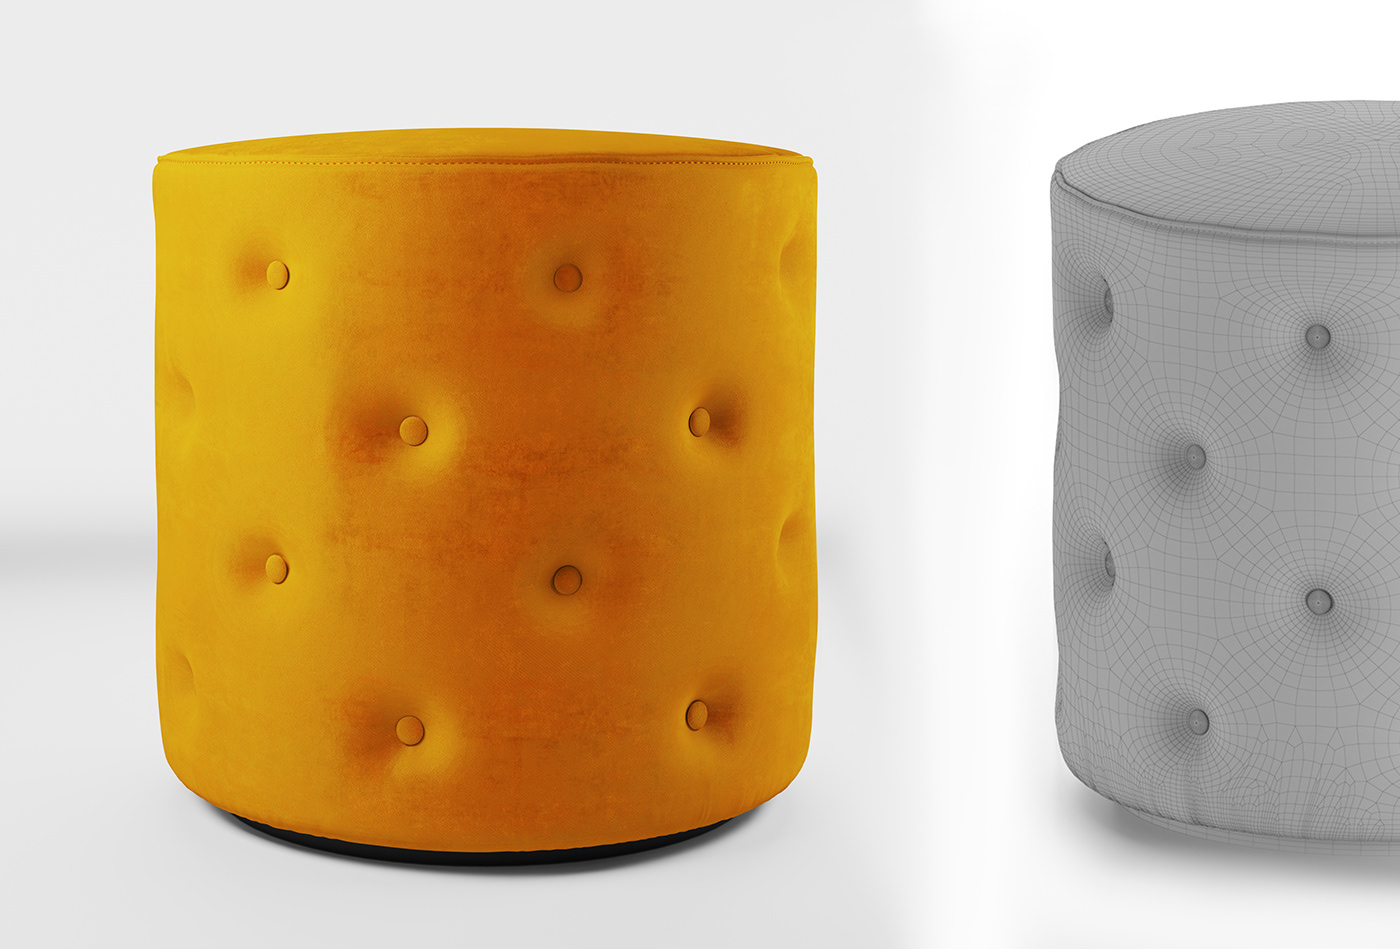 3D 3ds max archviz CGI corona design furniture modeling pouf seating